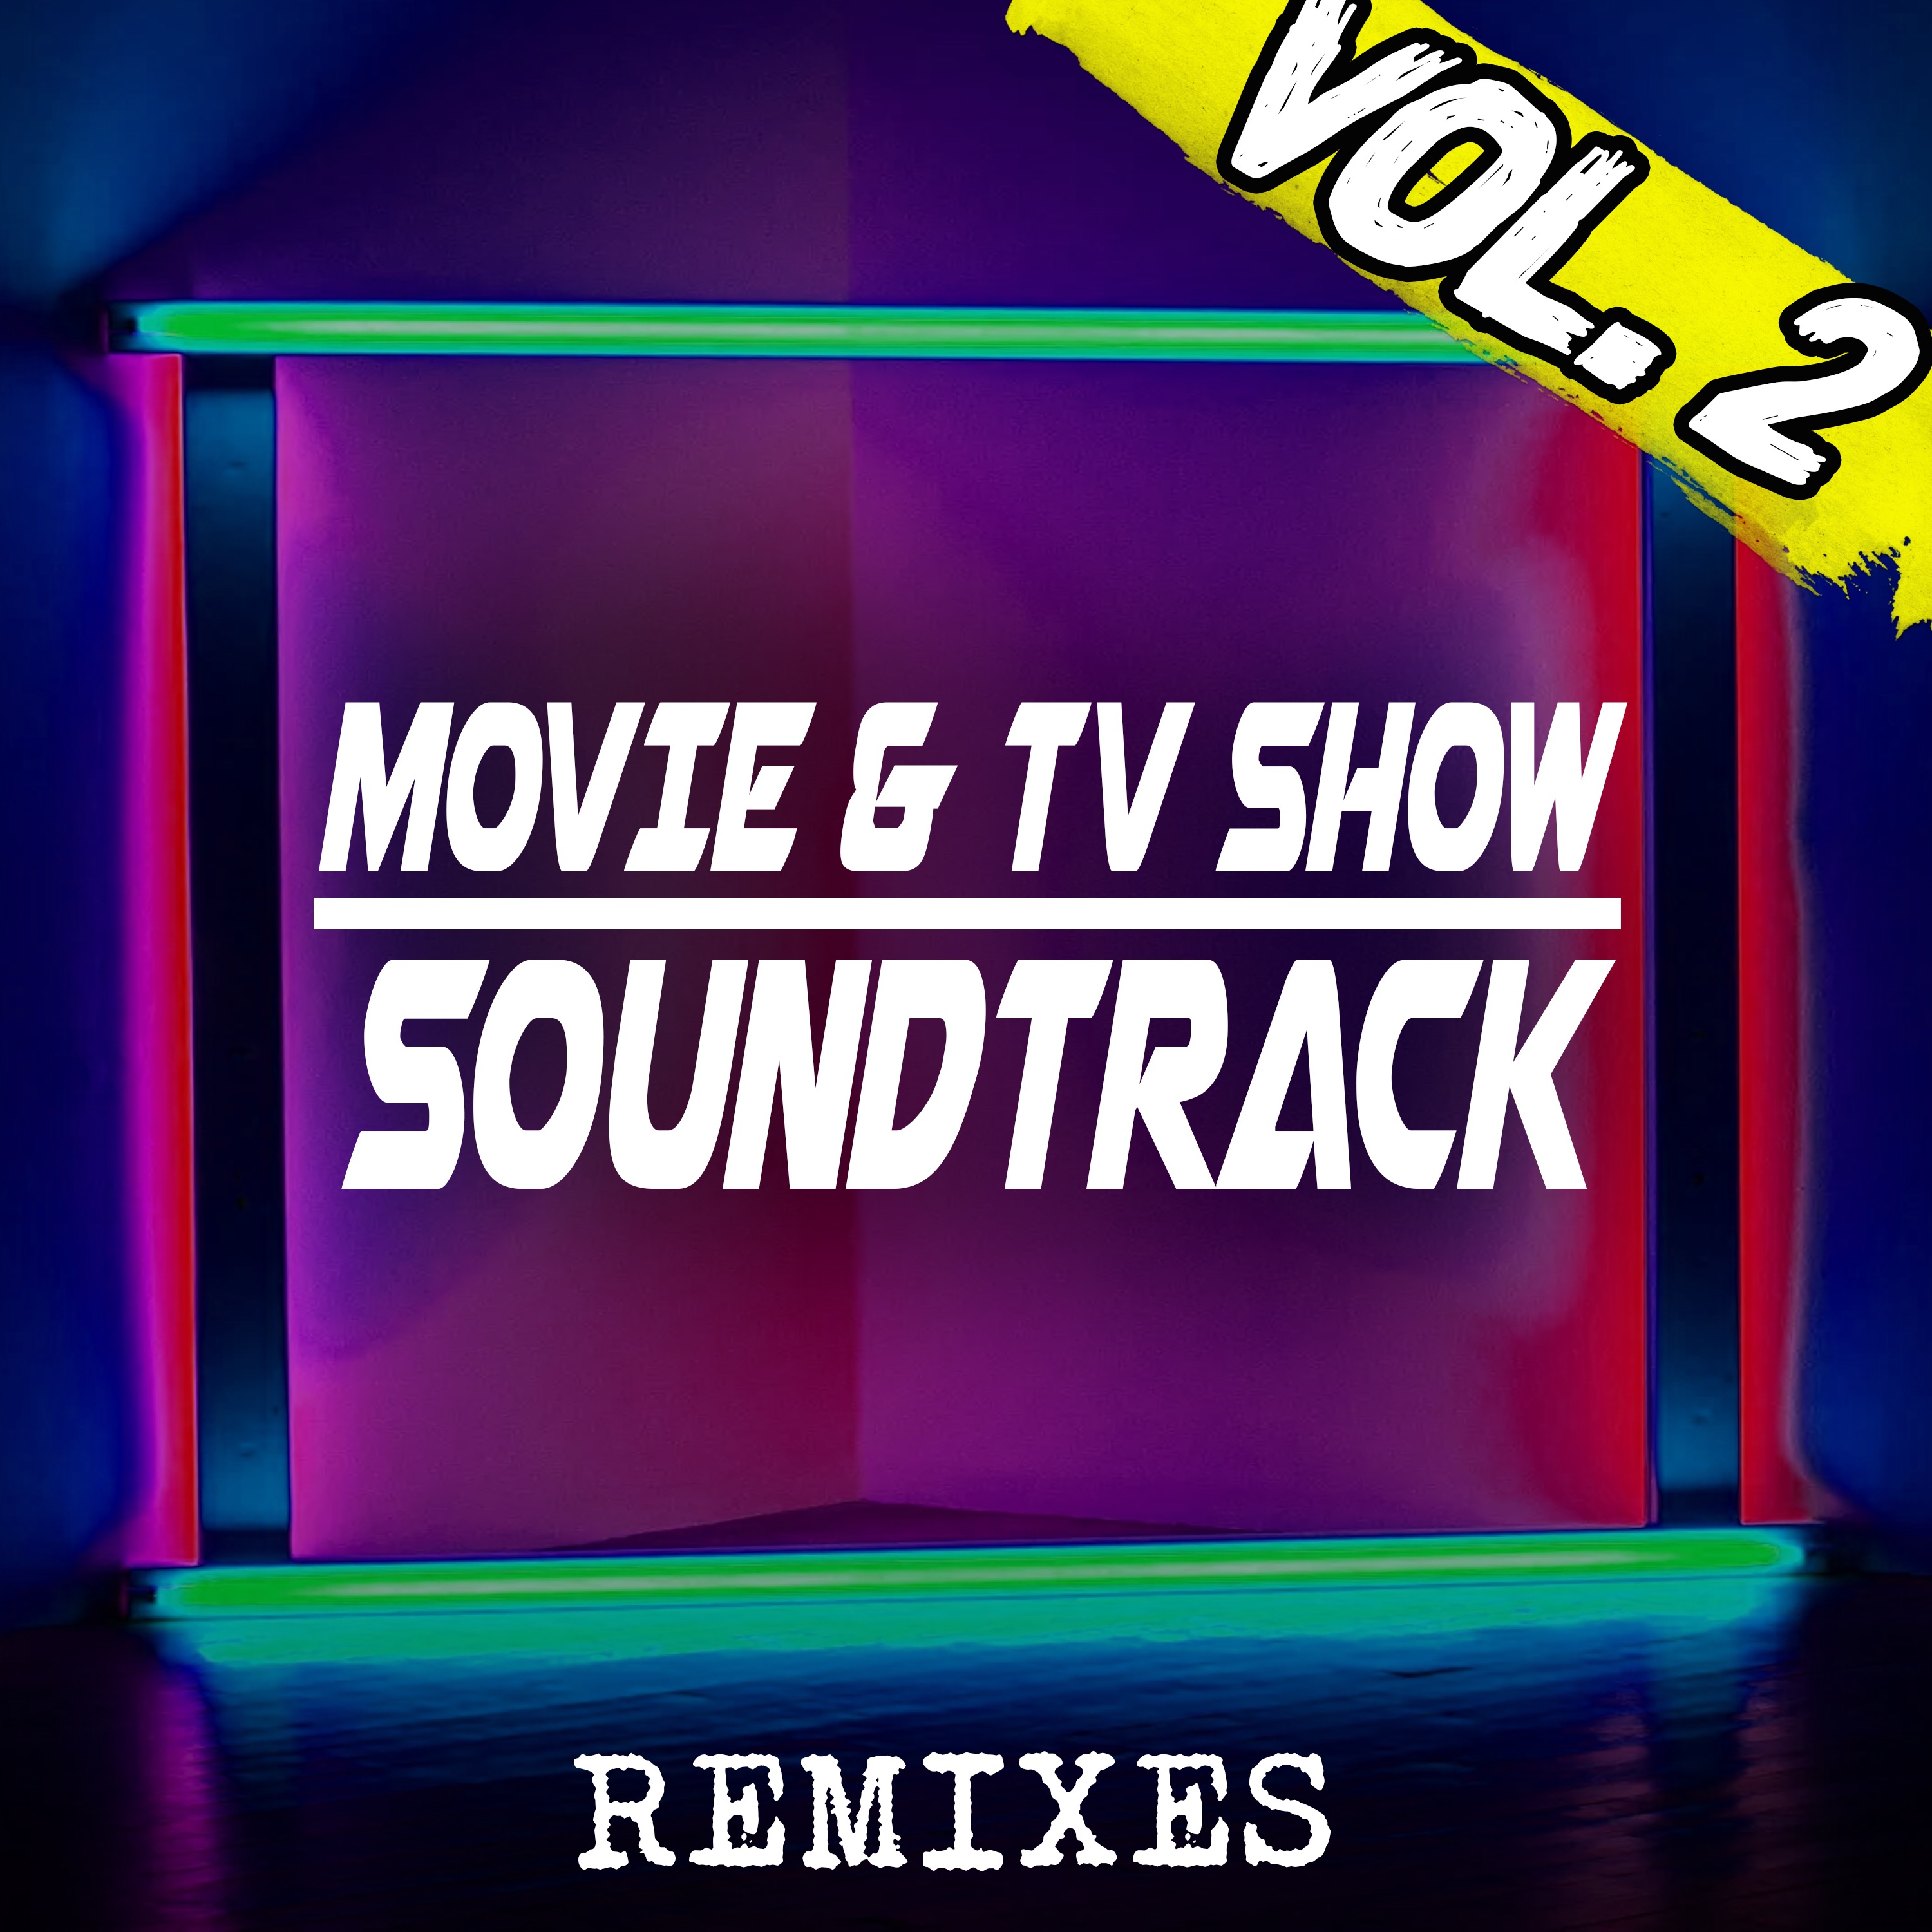 Soundtrack remix